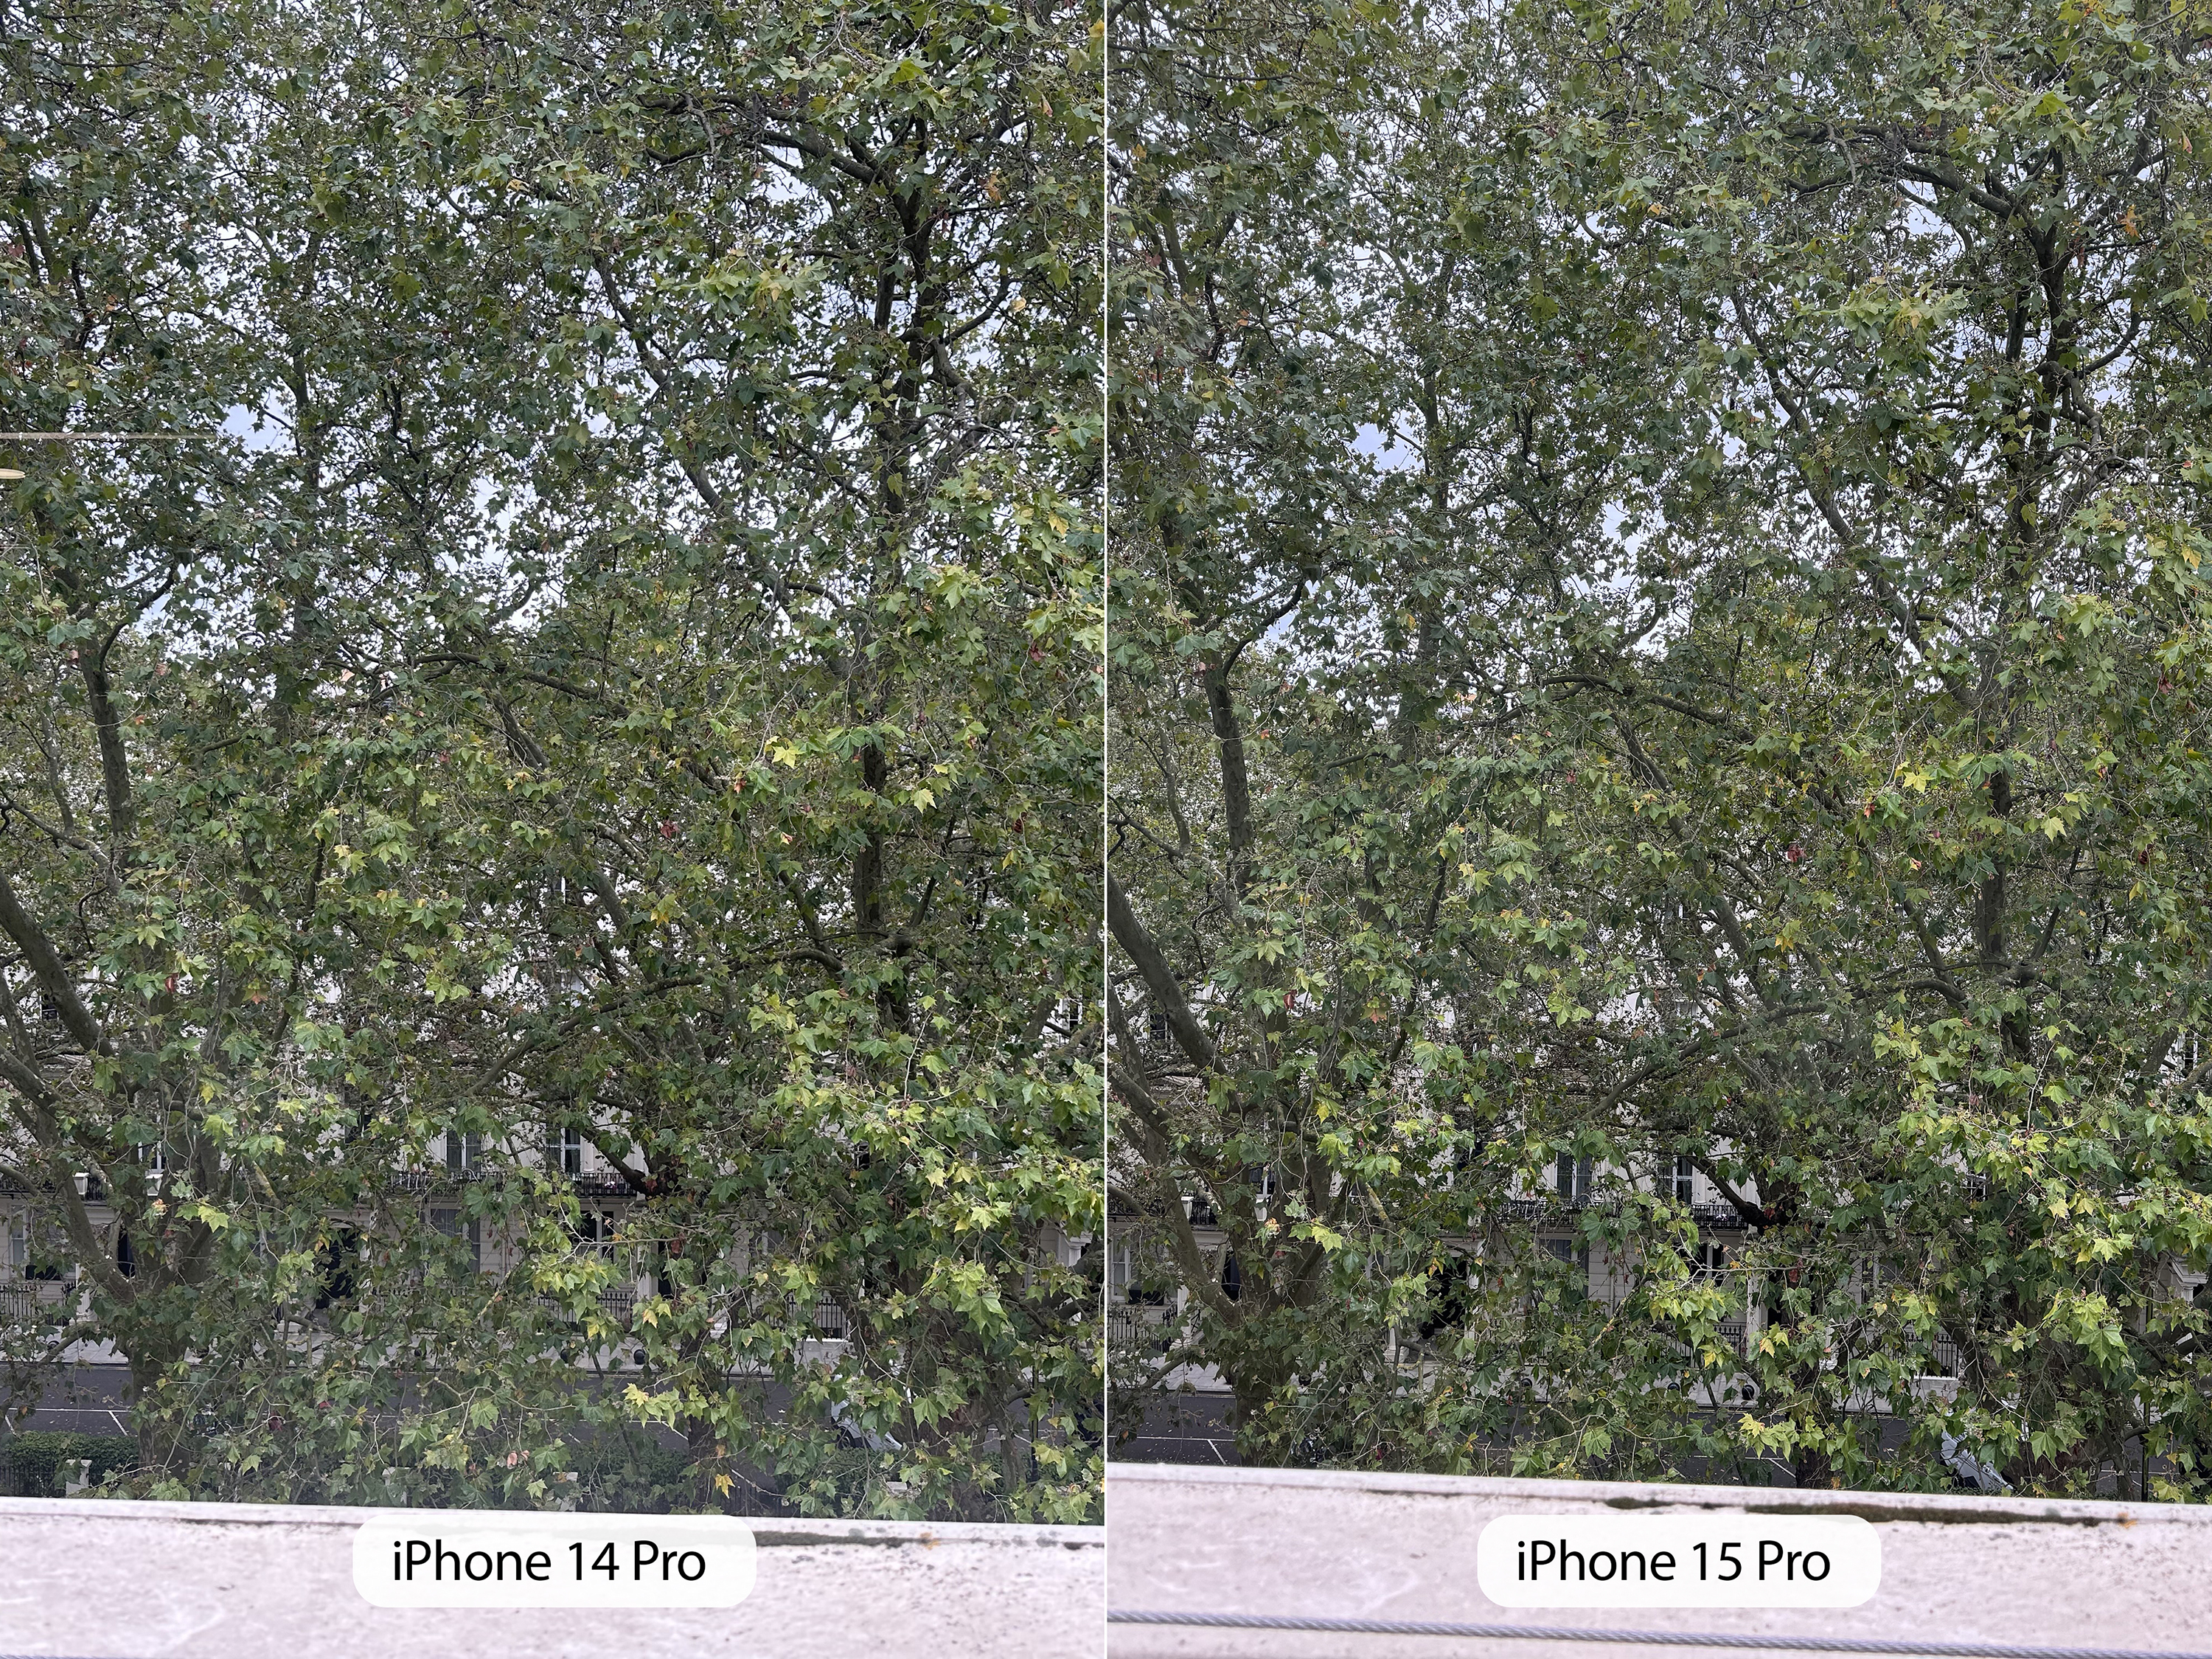 iPhone 15 Pro camera sample tree vs 14 Pro sub10